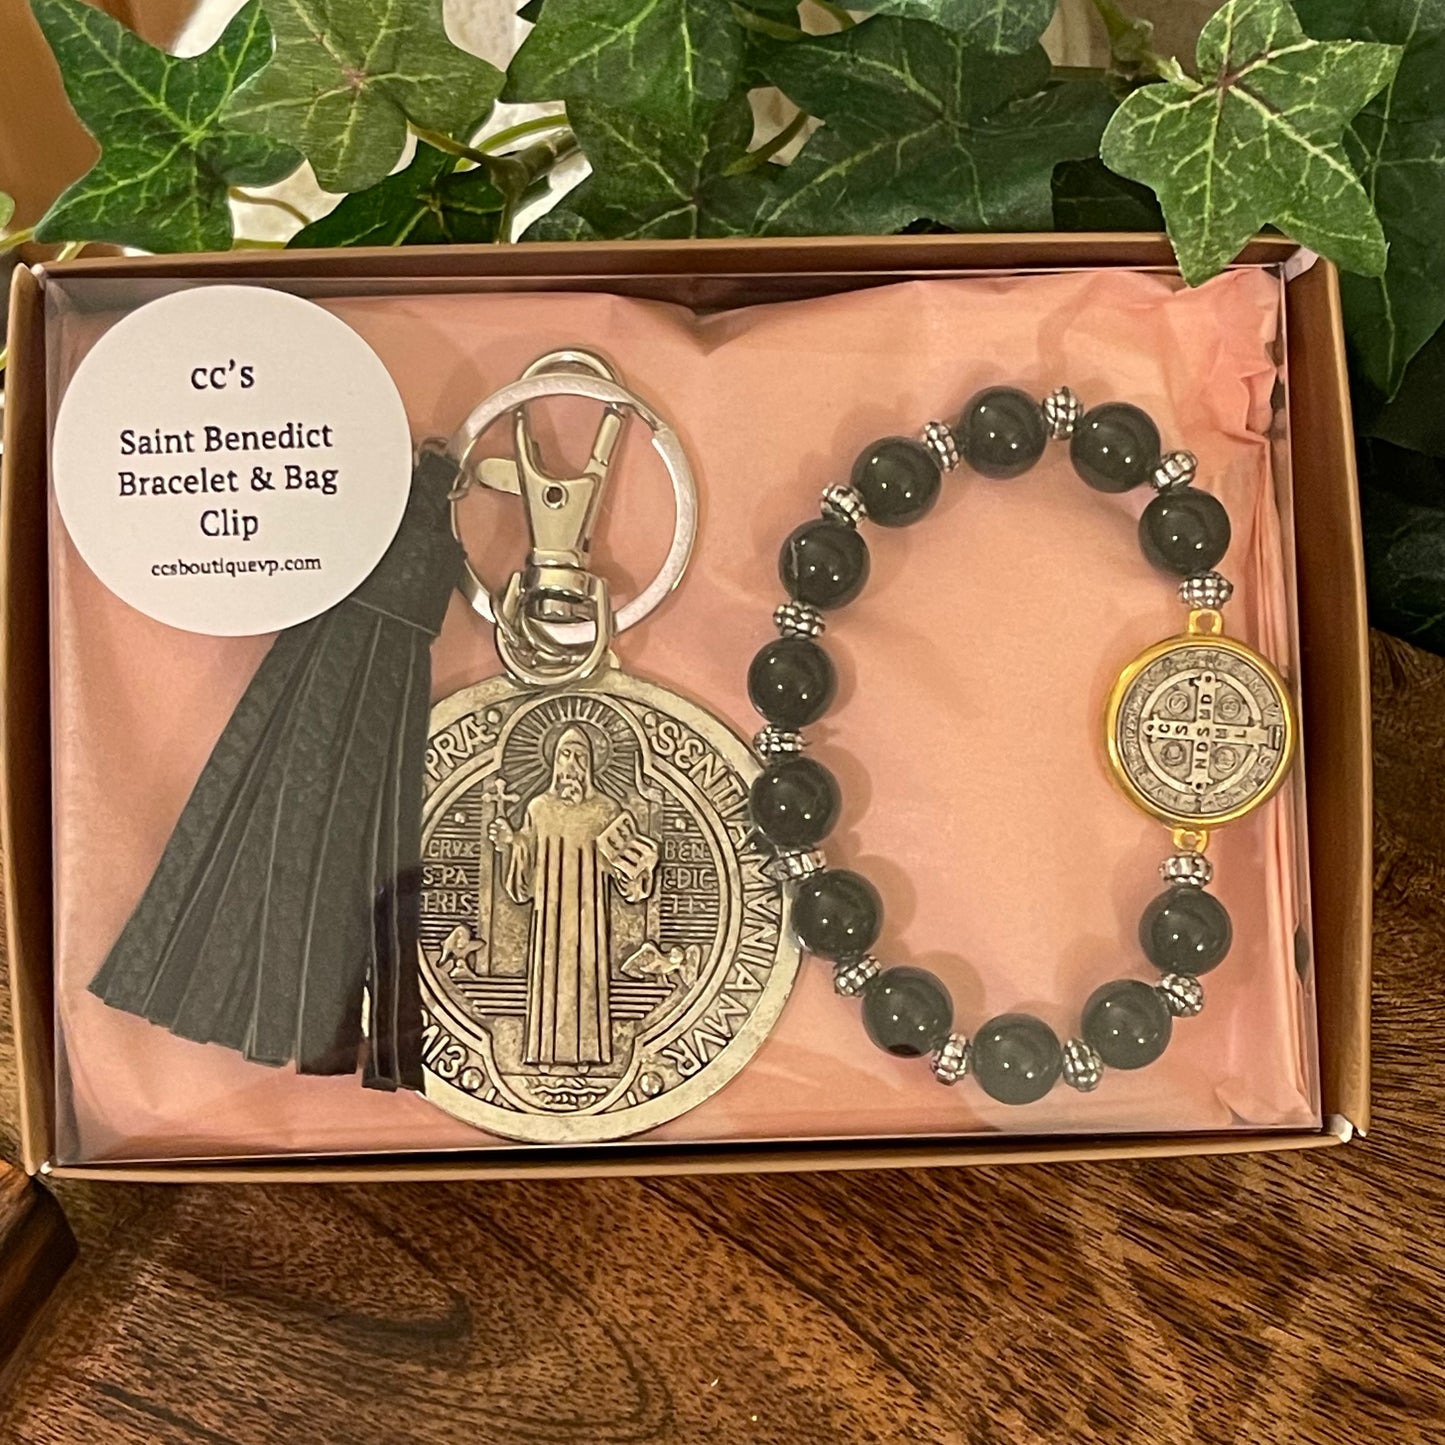 Saint Benedict Travel Clip and Bracelet Set